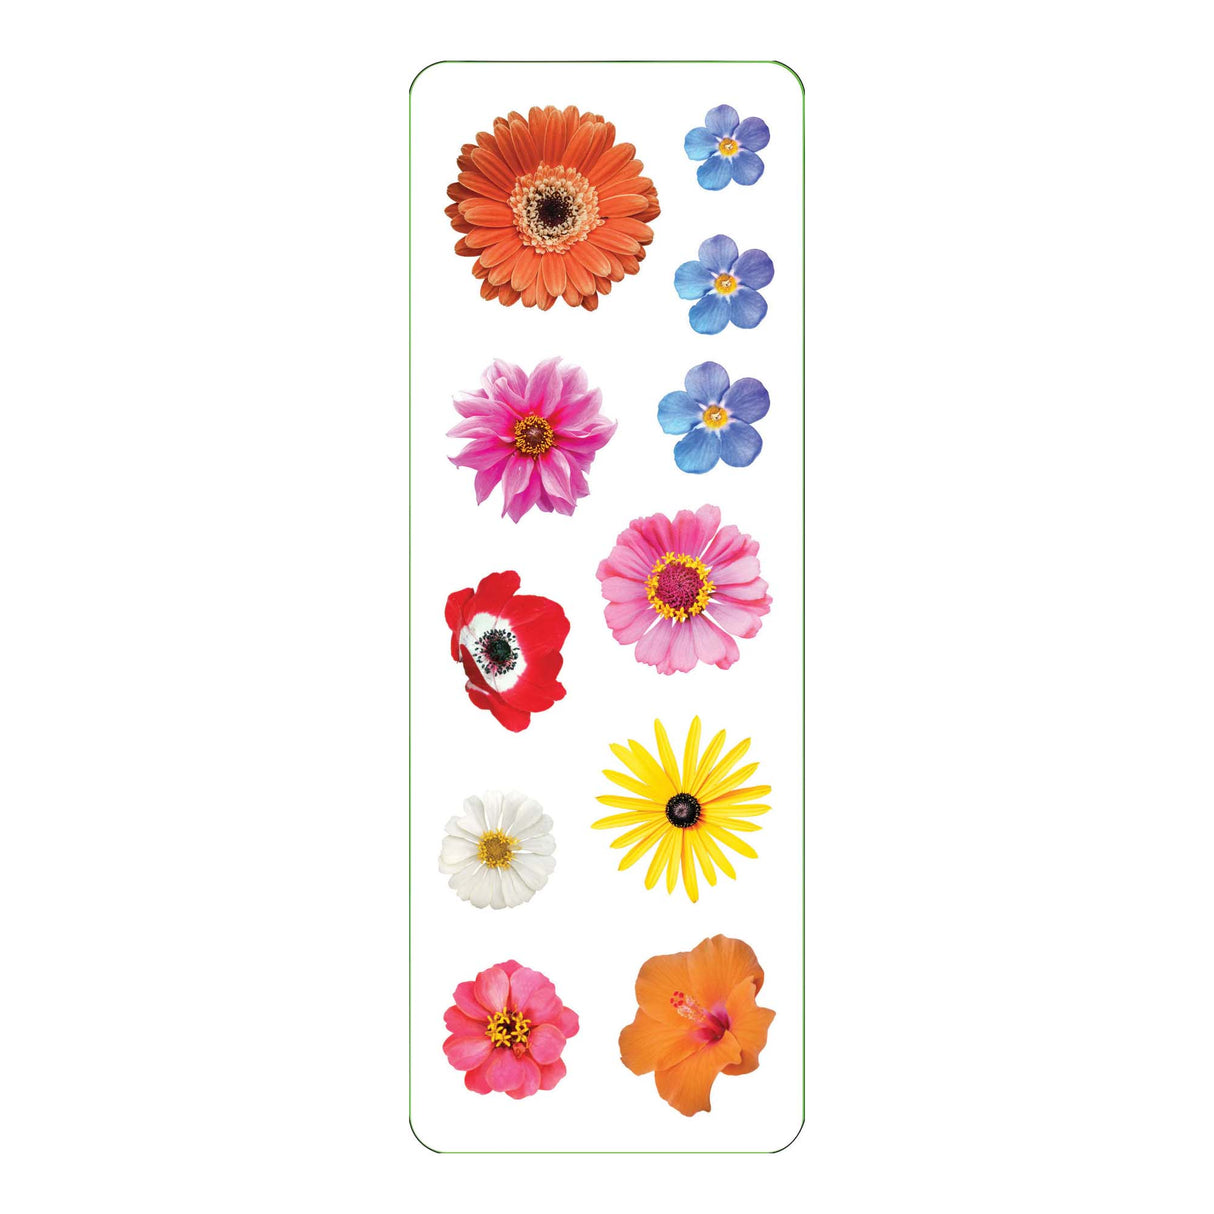 Flowers Sticker Set